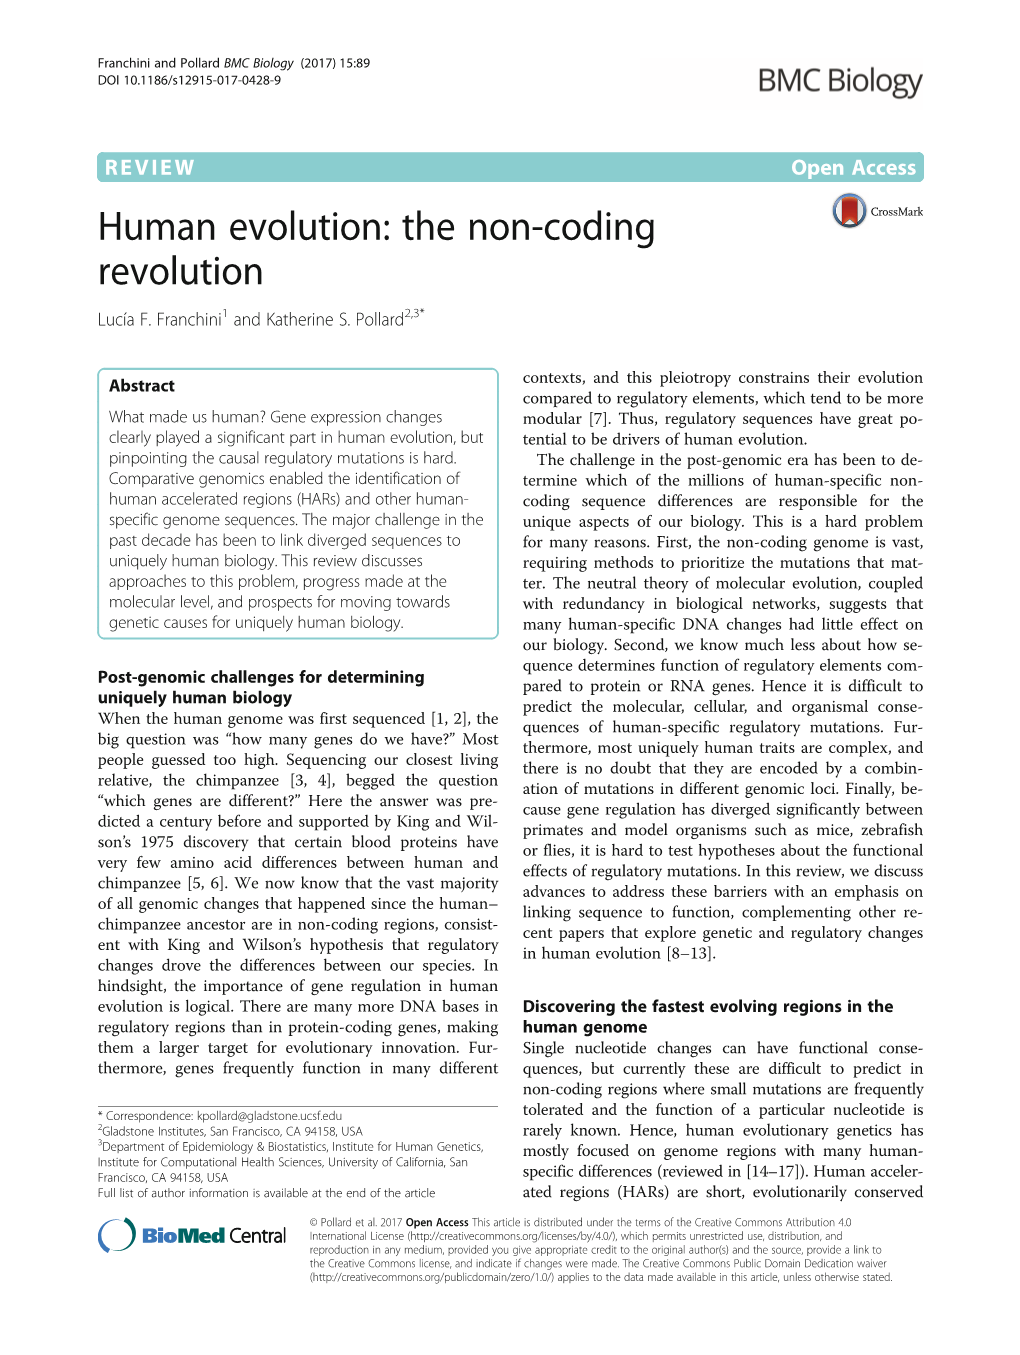 Human Evolution: the Non-Coding Revolution Lucía F